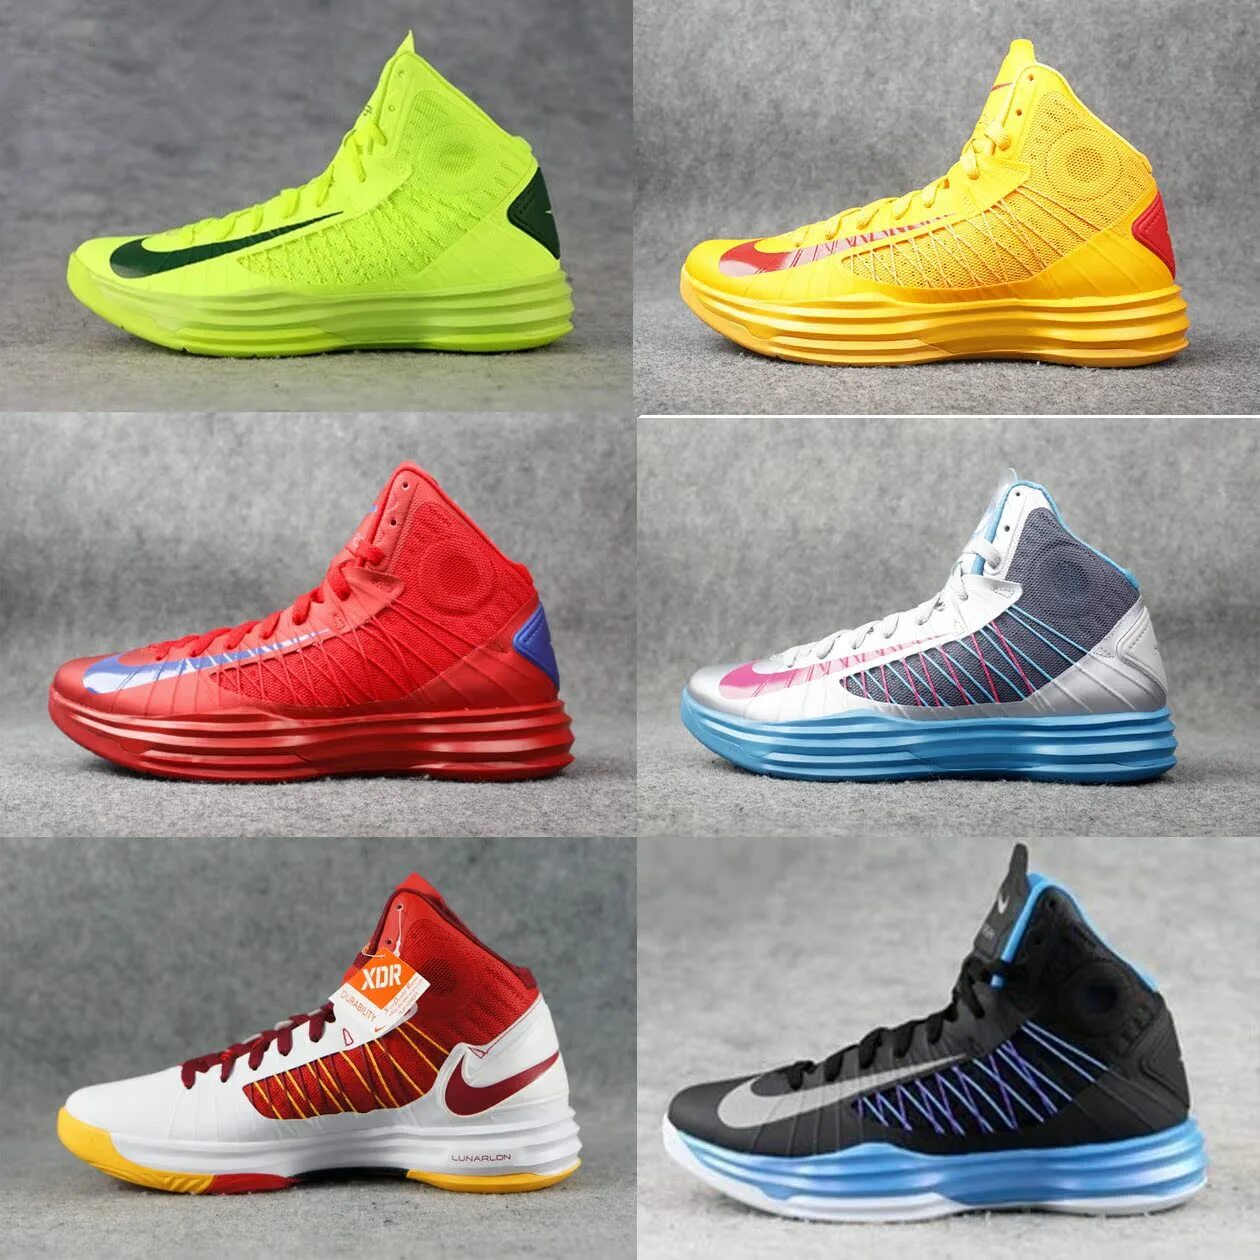 Найк гиперданк 2012. Кроссовки найк гиперданк 2012. Найк гиперданк 2012 мужские. Nike Basketball Shoes 1995-2002.